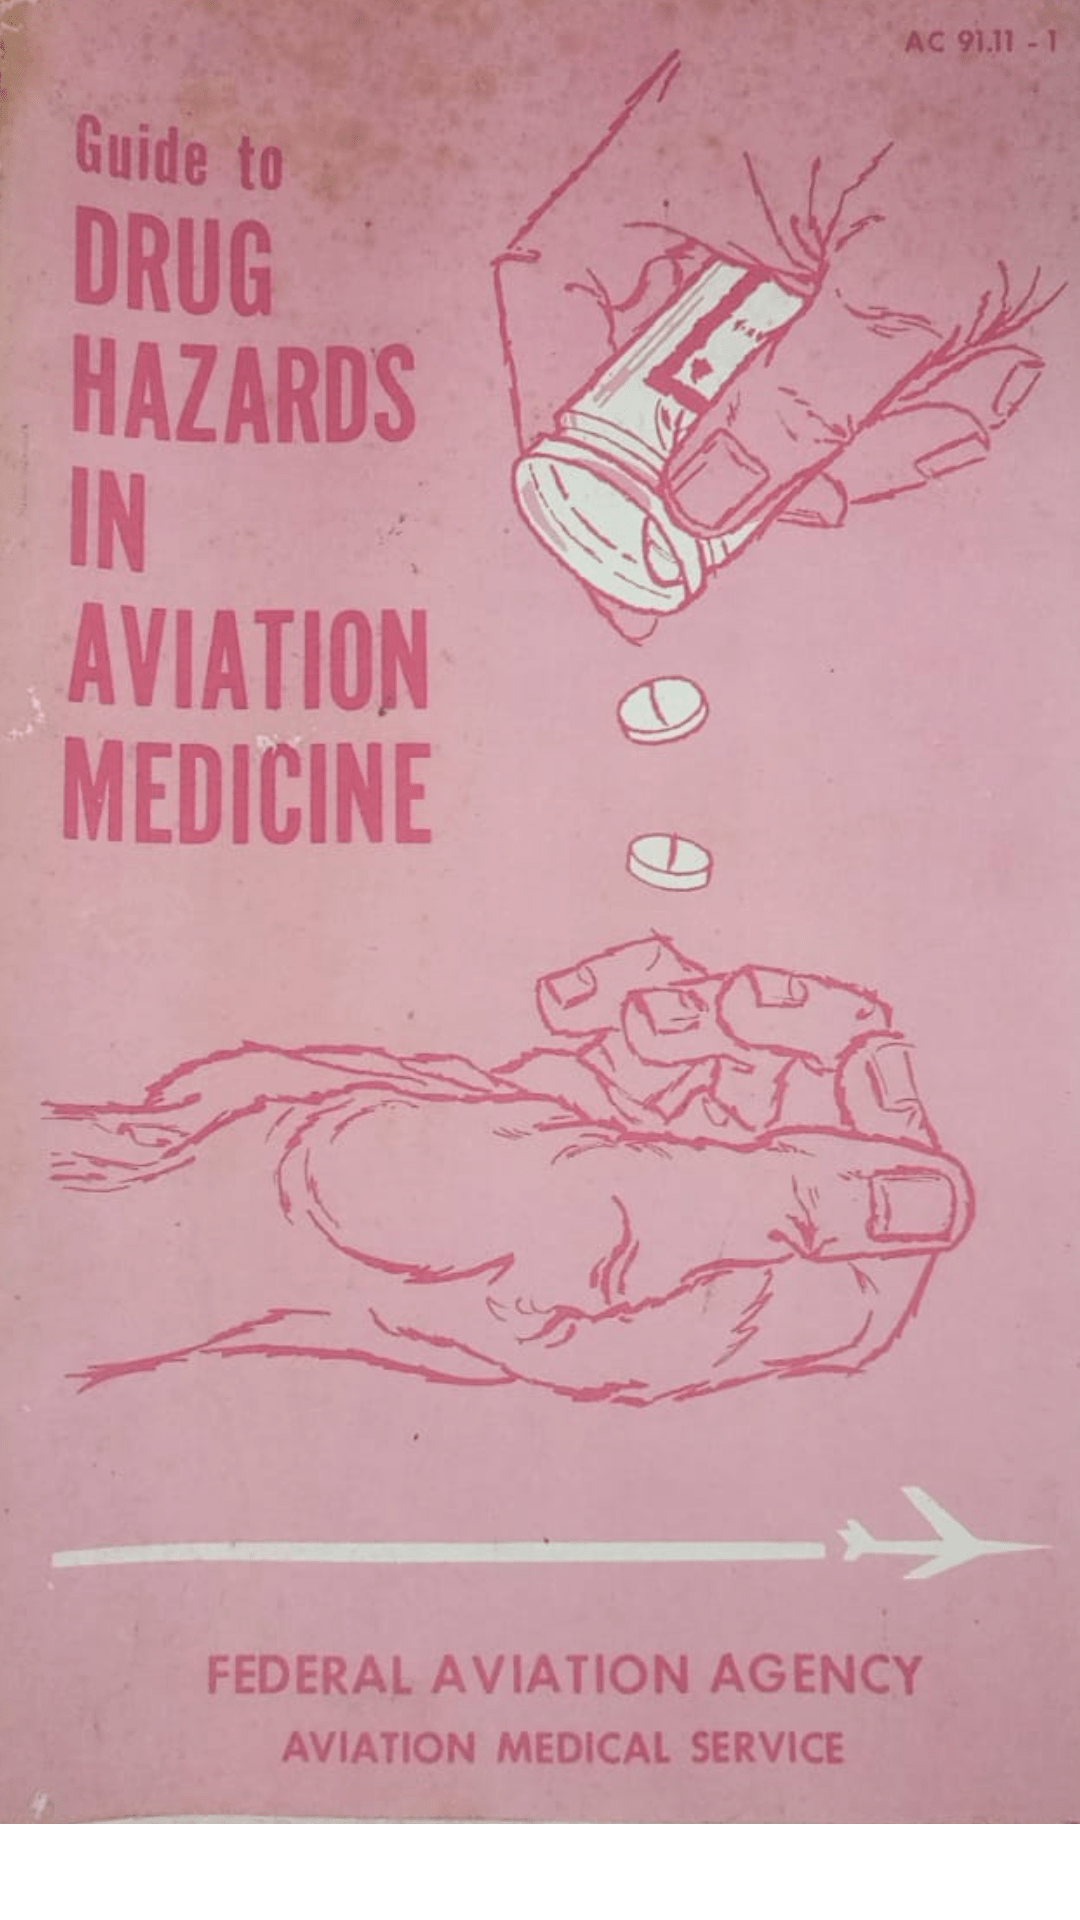 Guide to drug hazards in aviation medicine